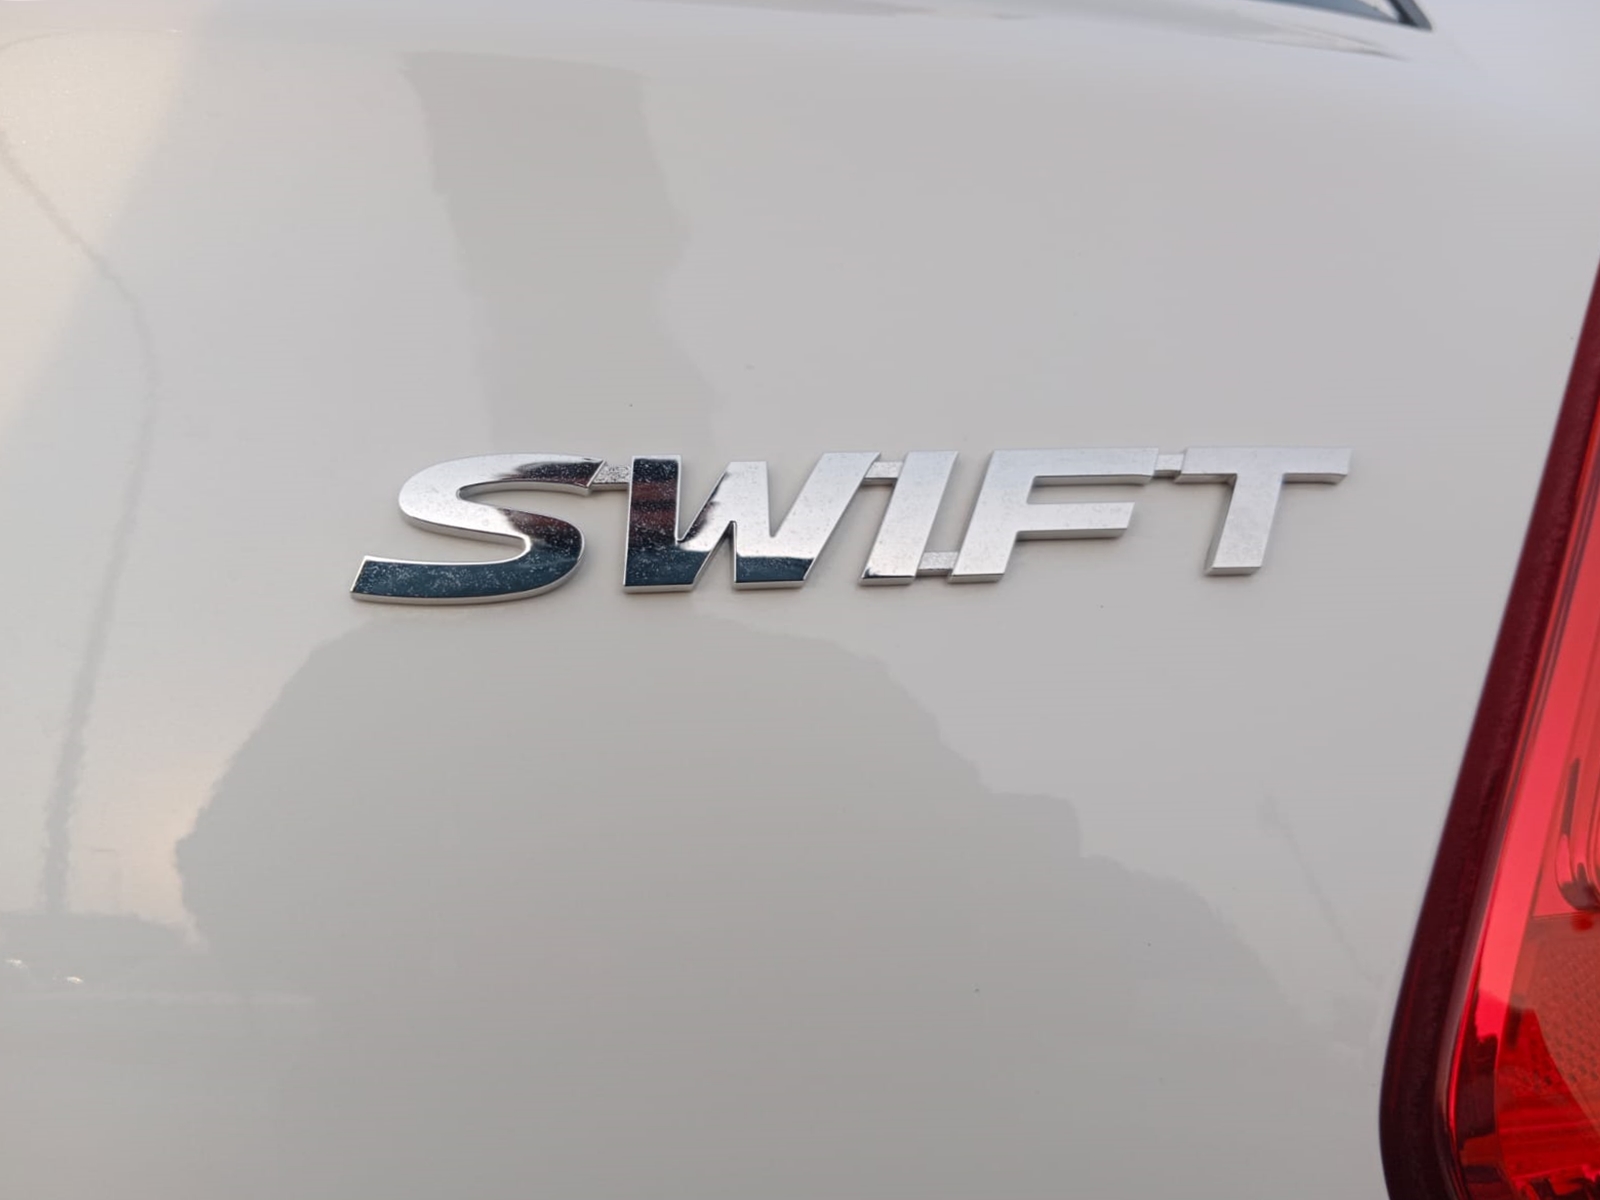 6290  SUZUKI SWIFT BRAND NEW 1.2 A/T 2WD OTHER